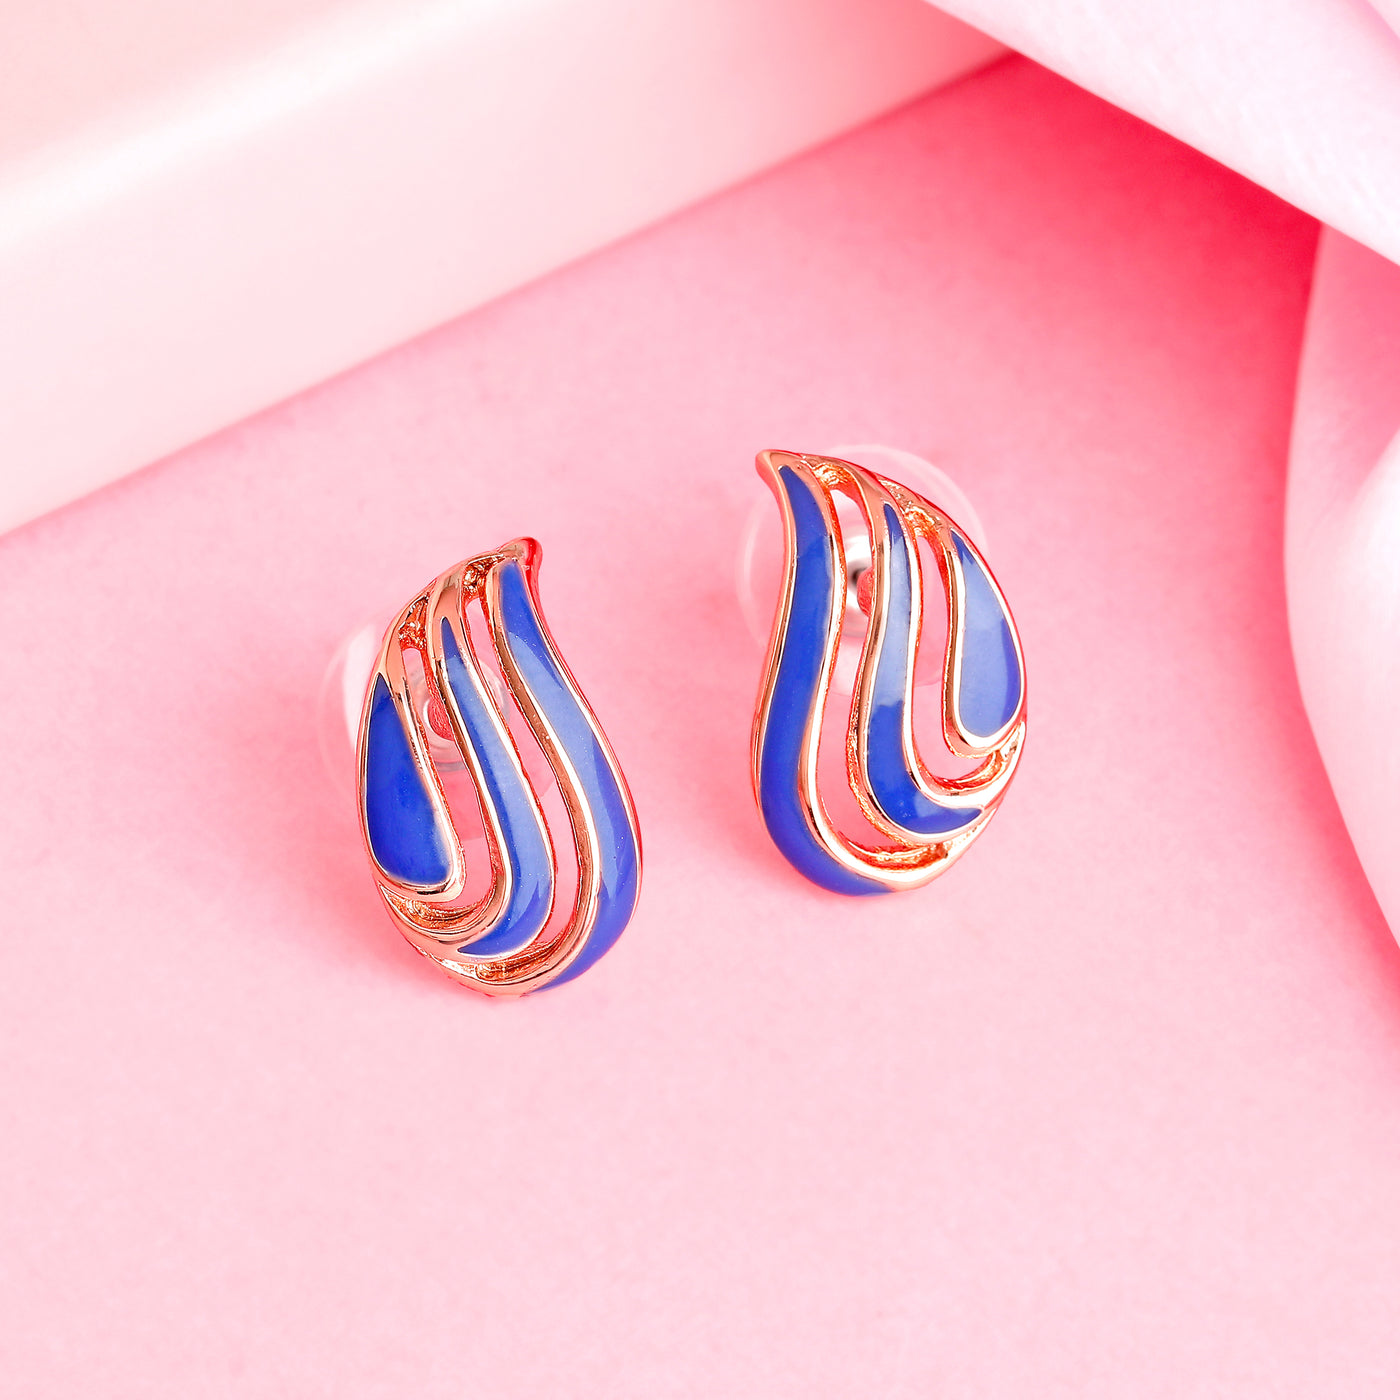 Estele Rose Gold Plated Leaf Designer Stud Earrings with Blue Enamel for Women